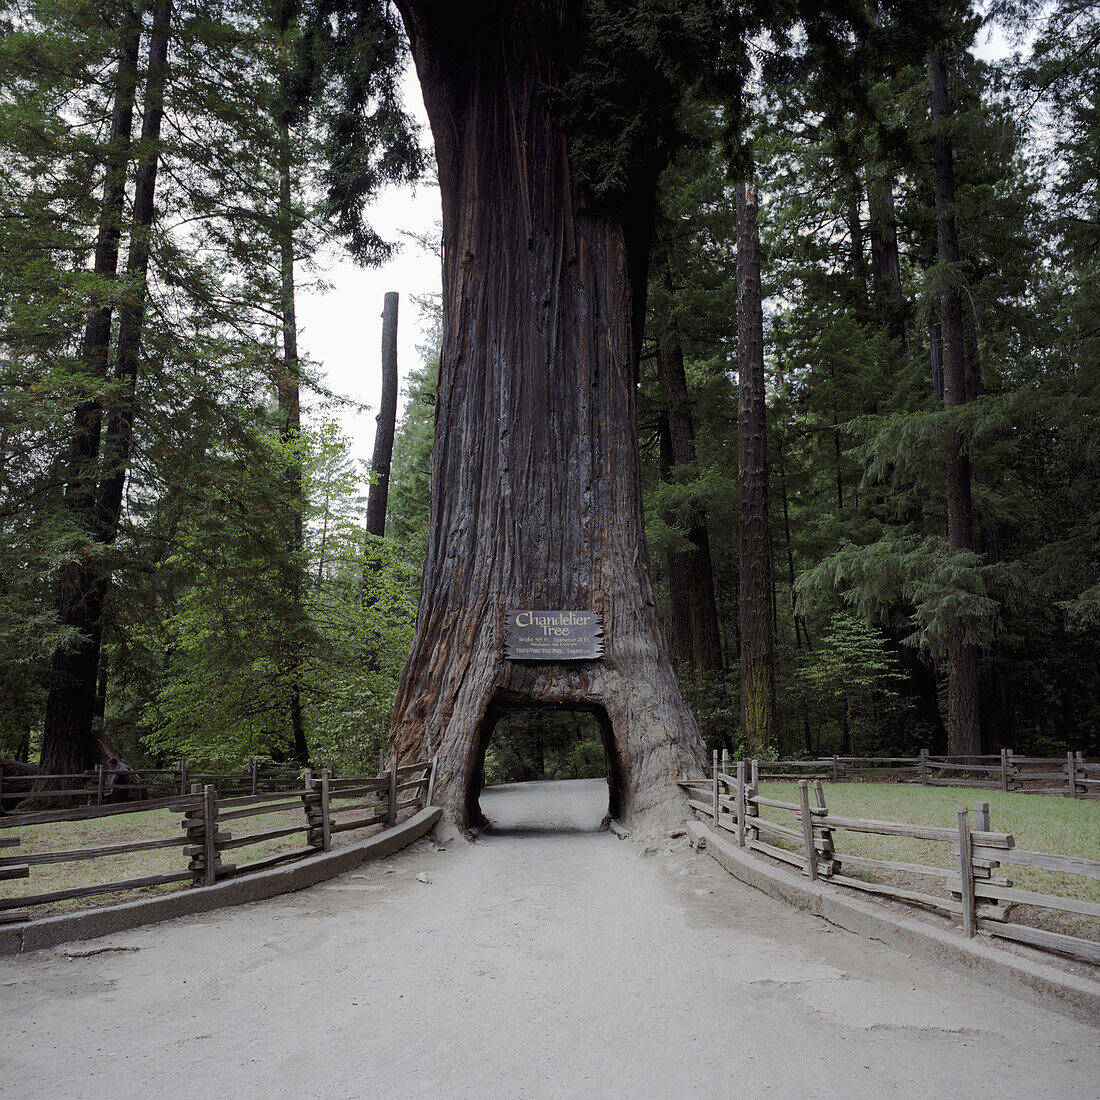 The Chandelier tree, a redwood tree cars can drive through, Leggett, California, USA